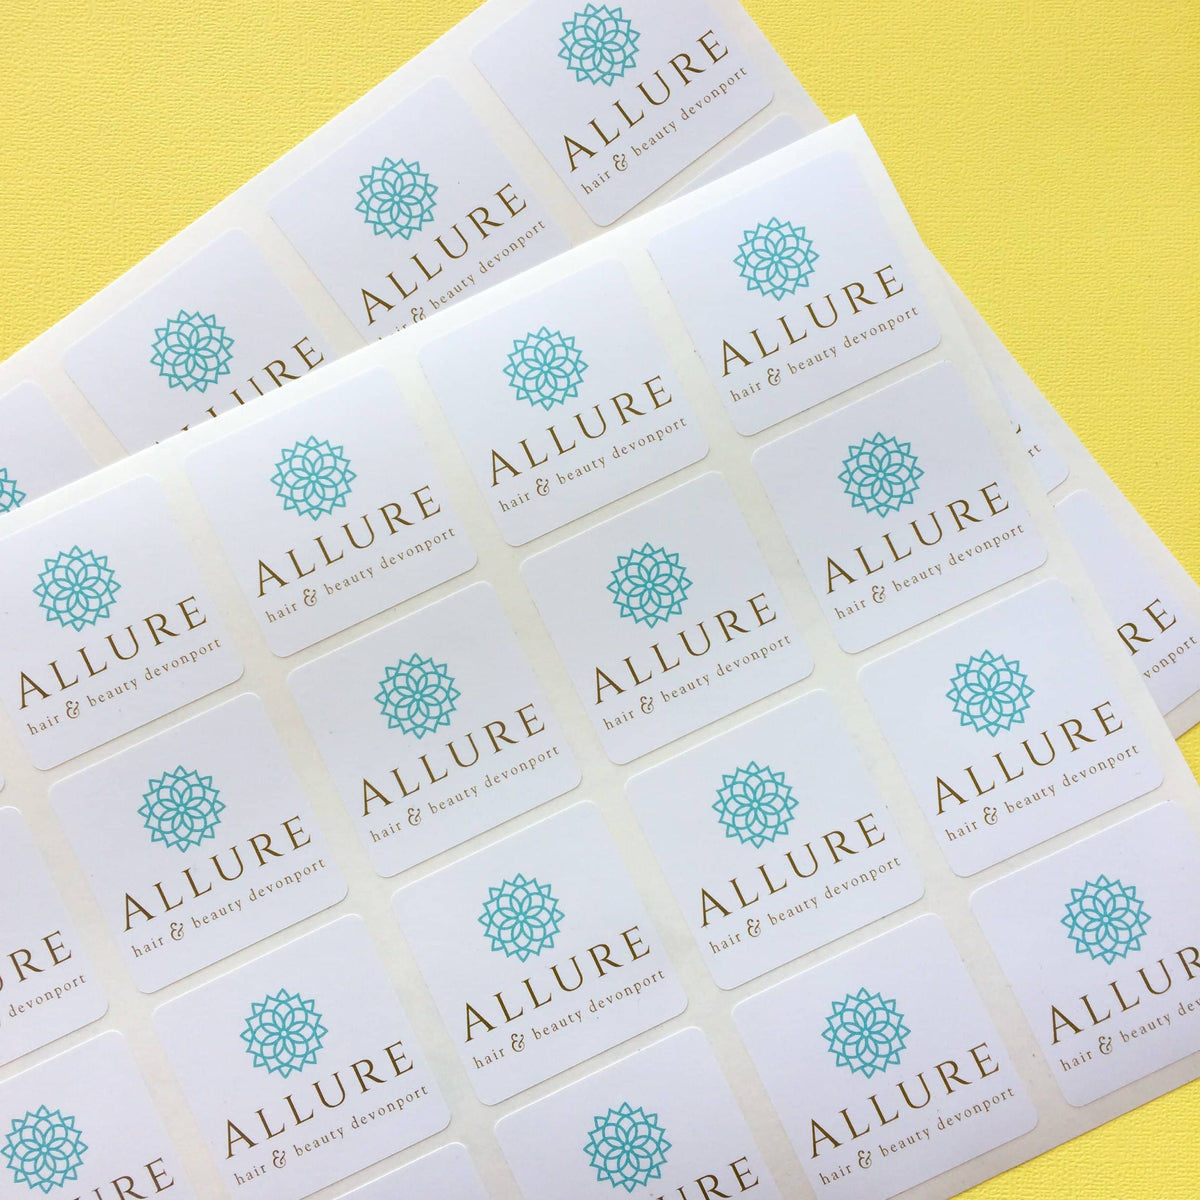 Allure Hair &amp; Beauty Development brand logo square sheet label stickers.